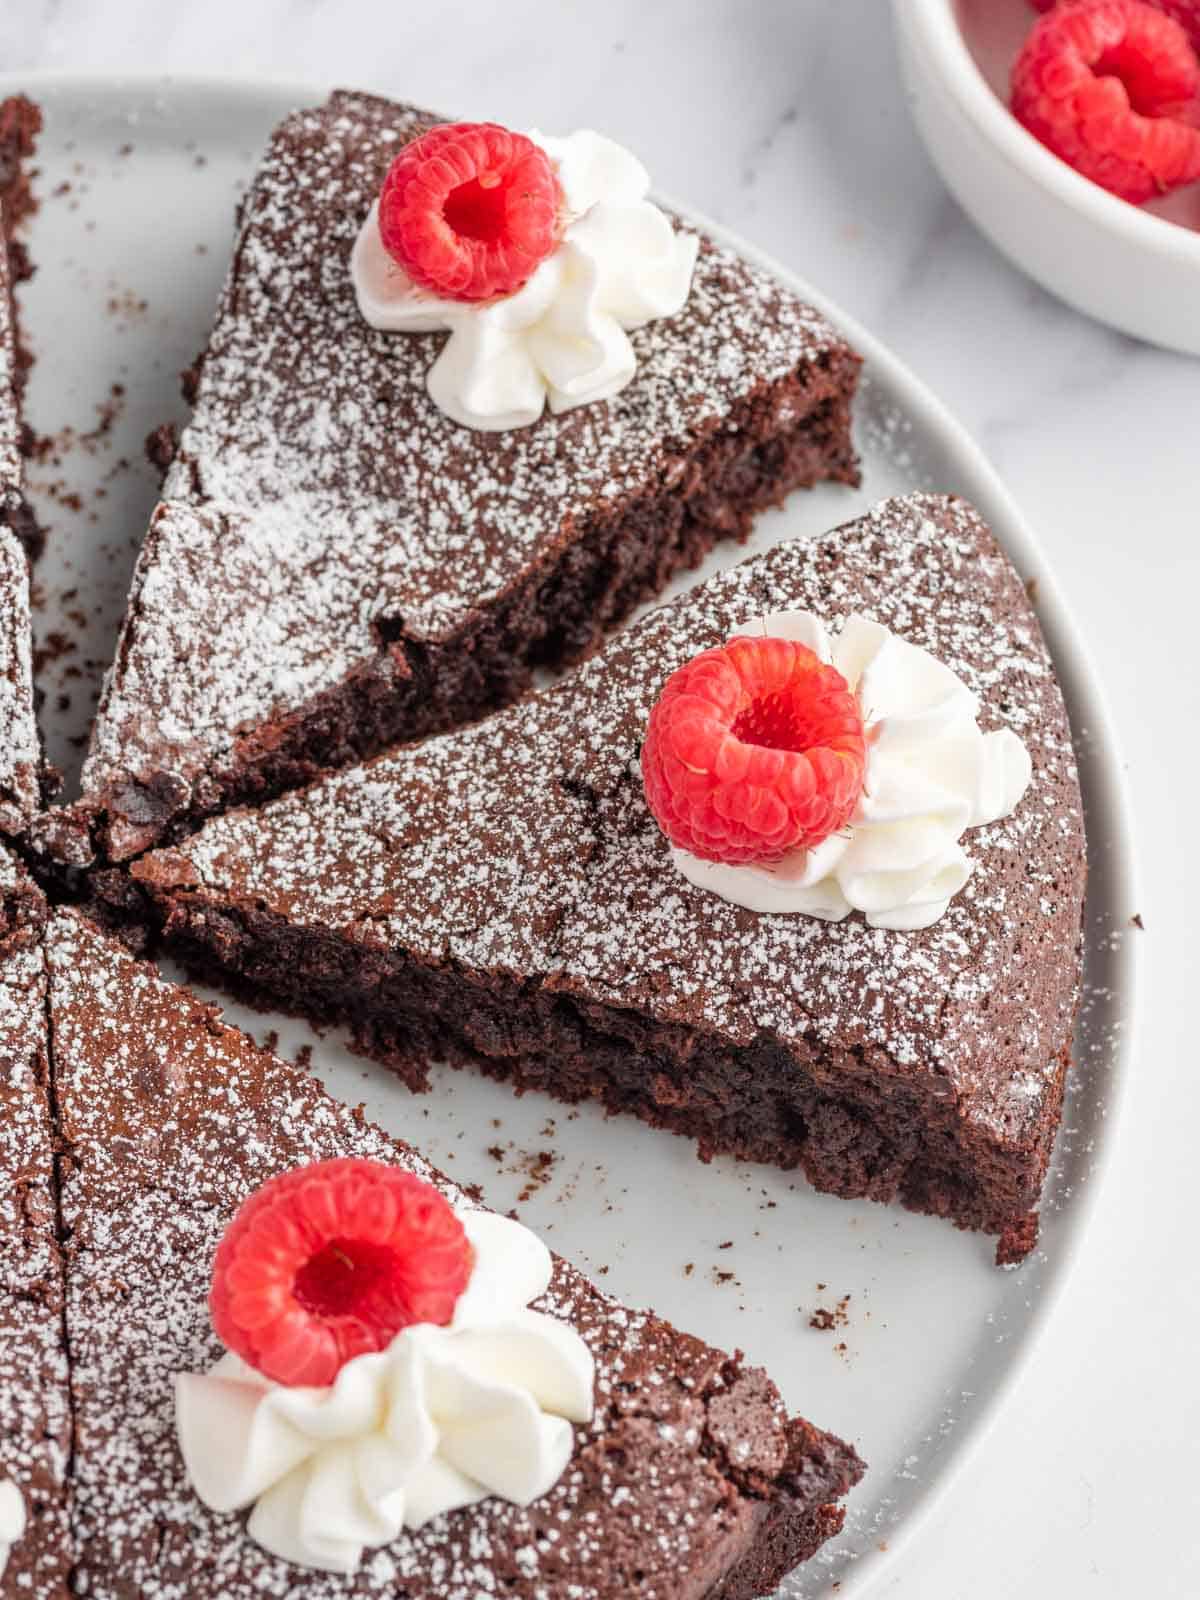 Flourless chocolate torte with whipped cream and raspberries.